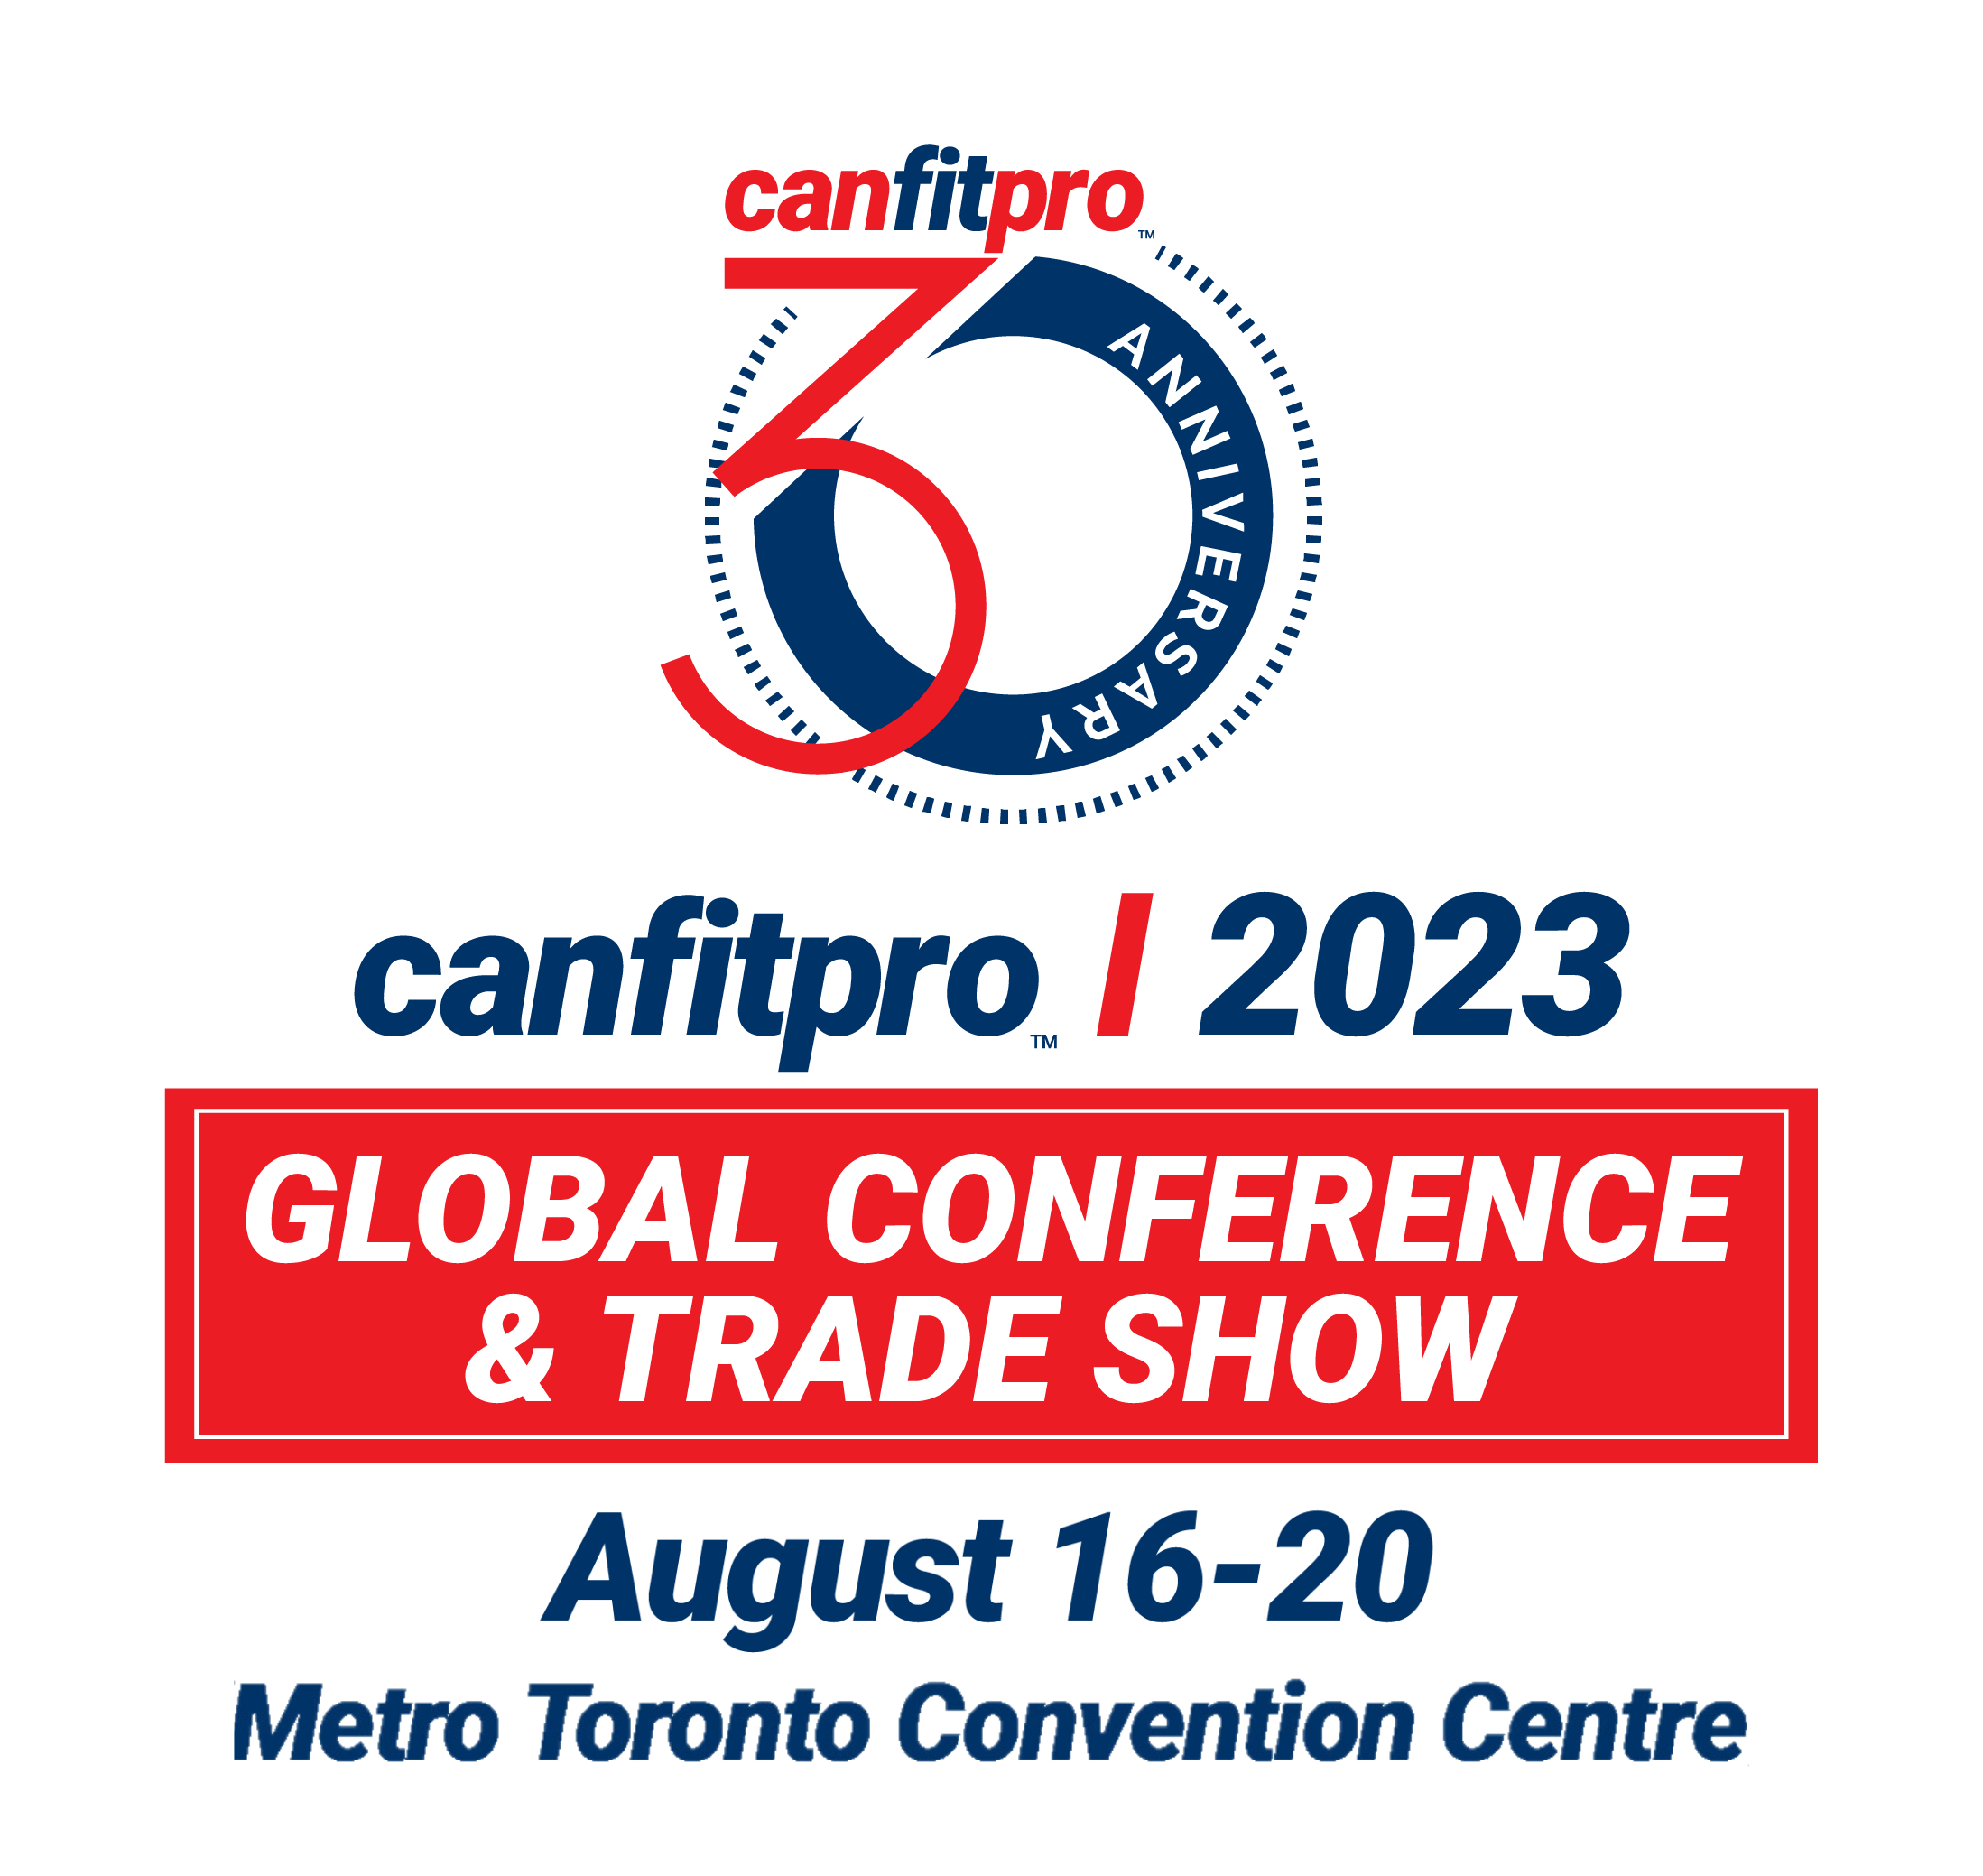 canfitpro 2023 logo - 30 year anniversary logo stacked